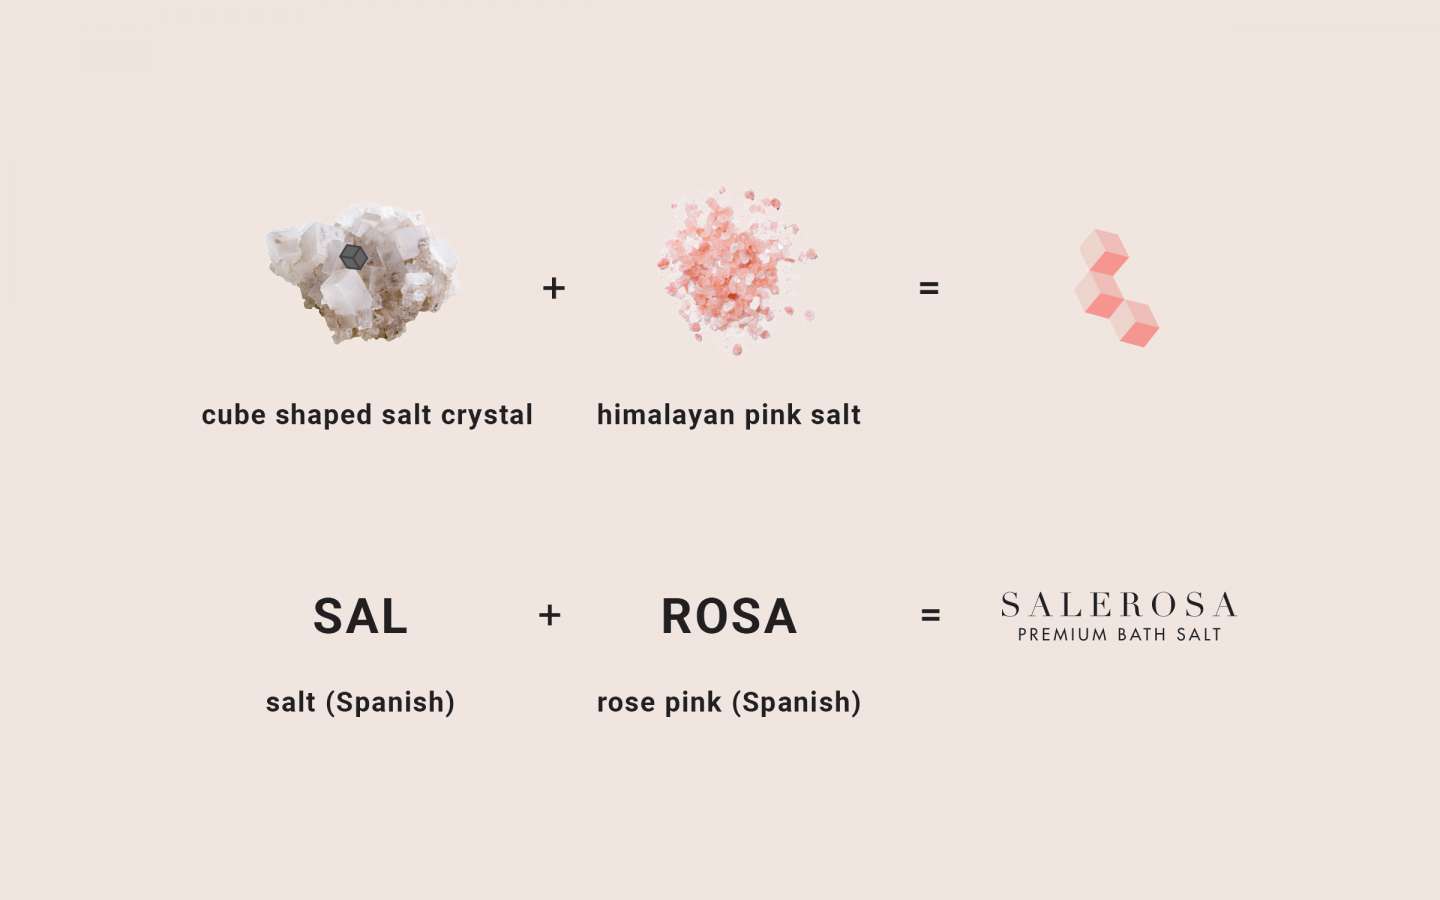 SALEROSA Premium Bath Salt